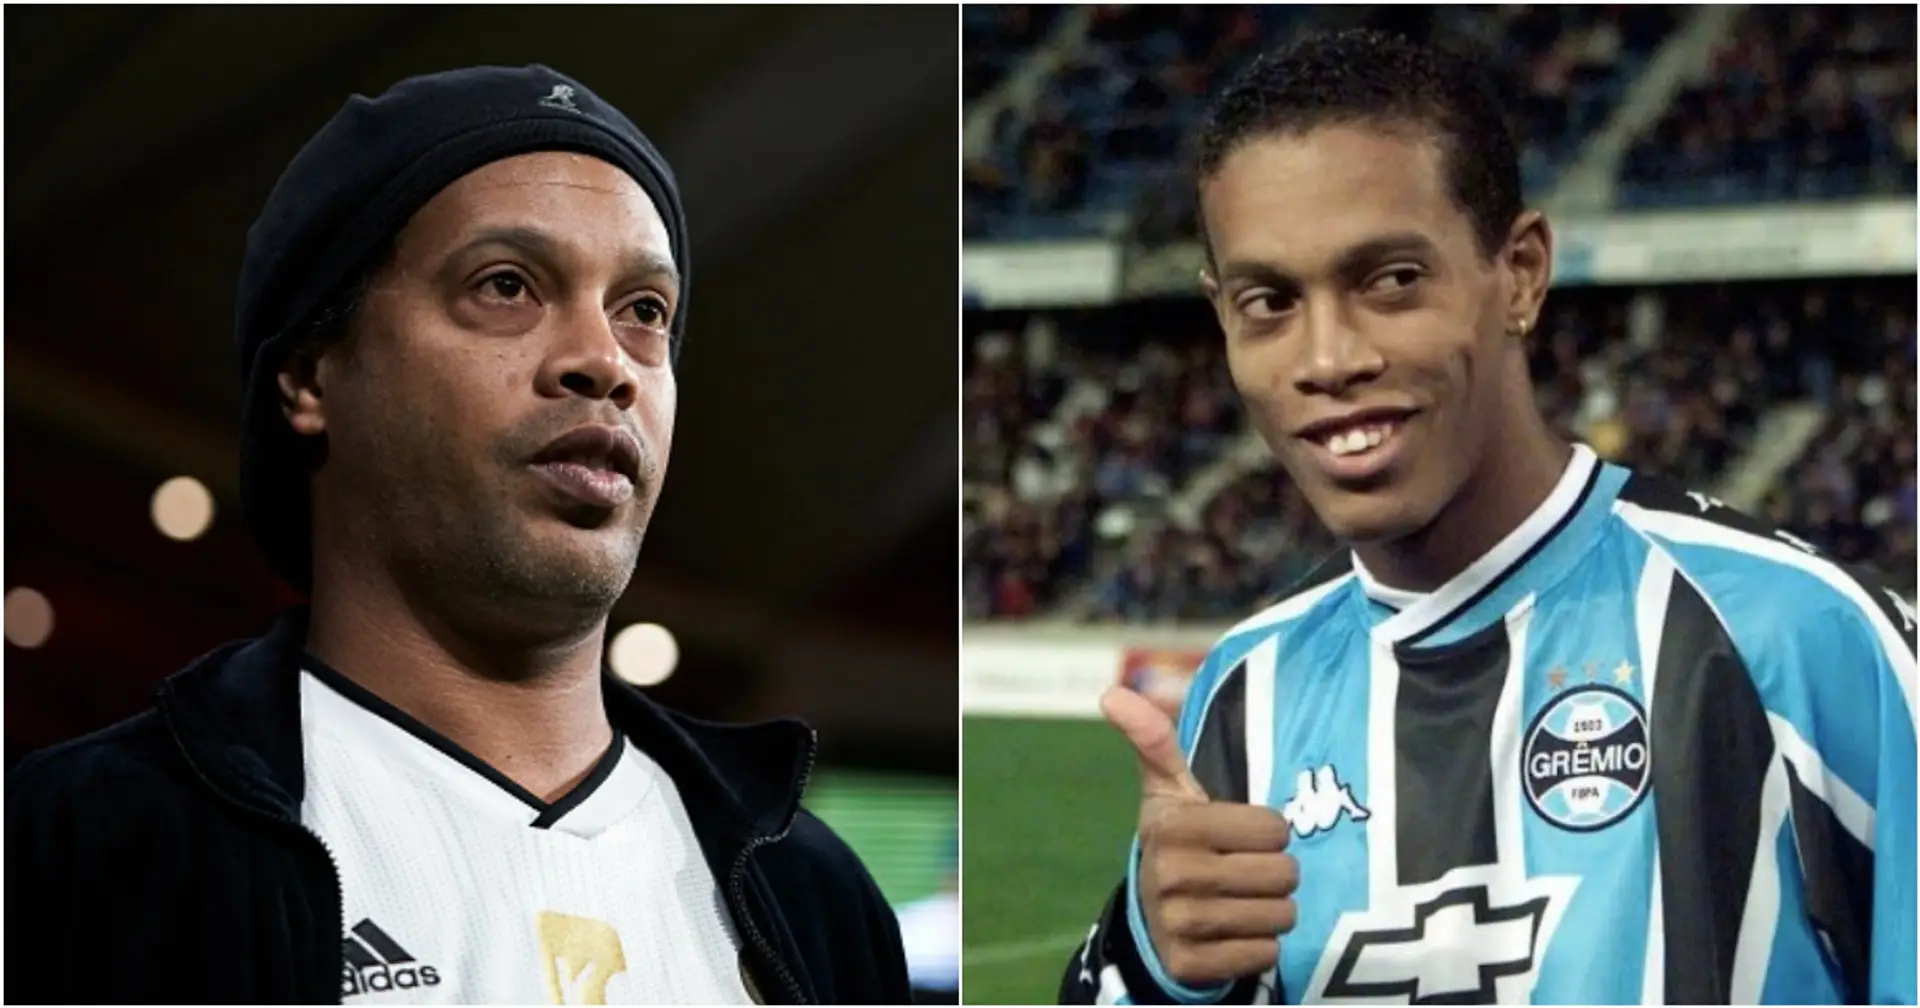 Why do Gremio fans absolutely hate Ronaldinho?